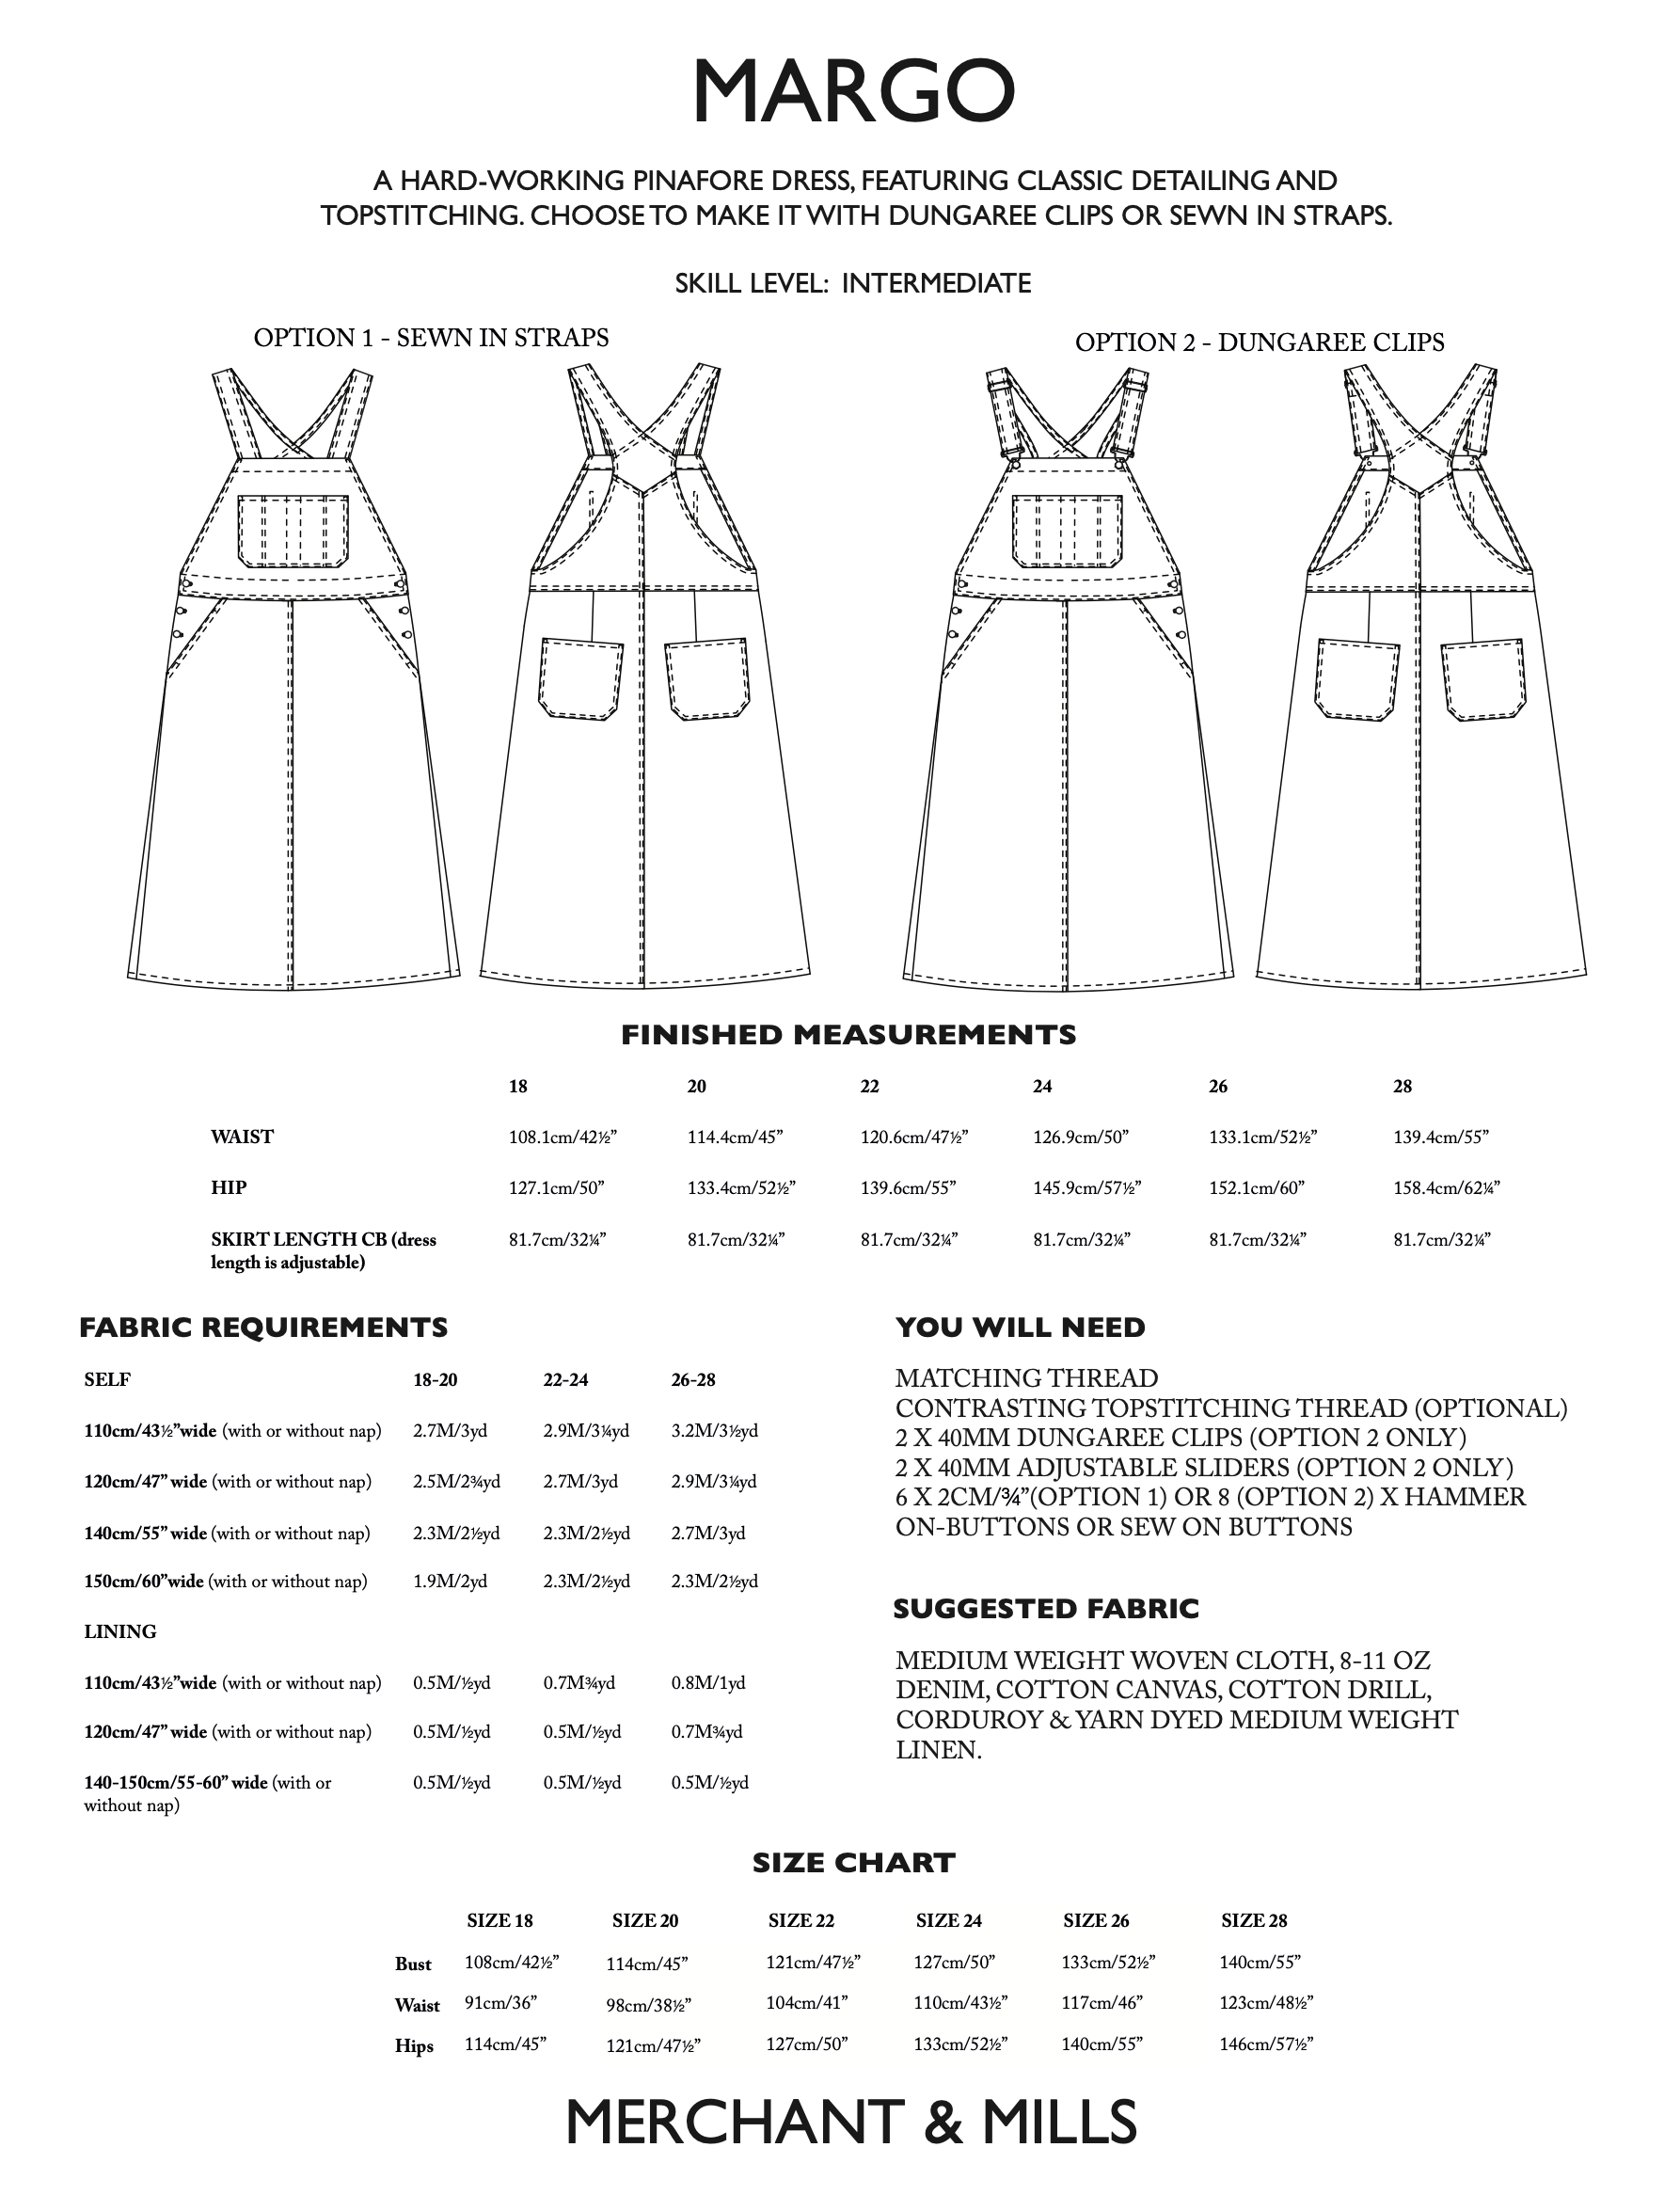 Merchant & Mills Margo Dress